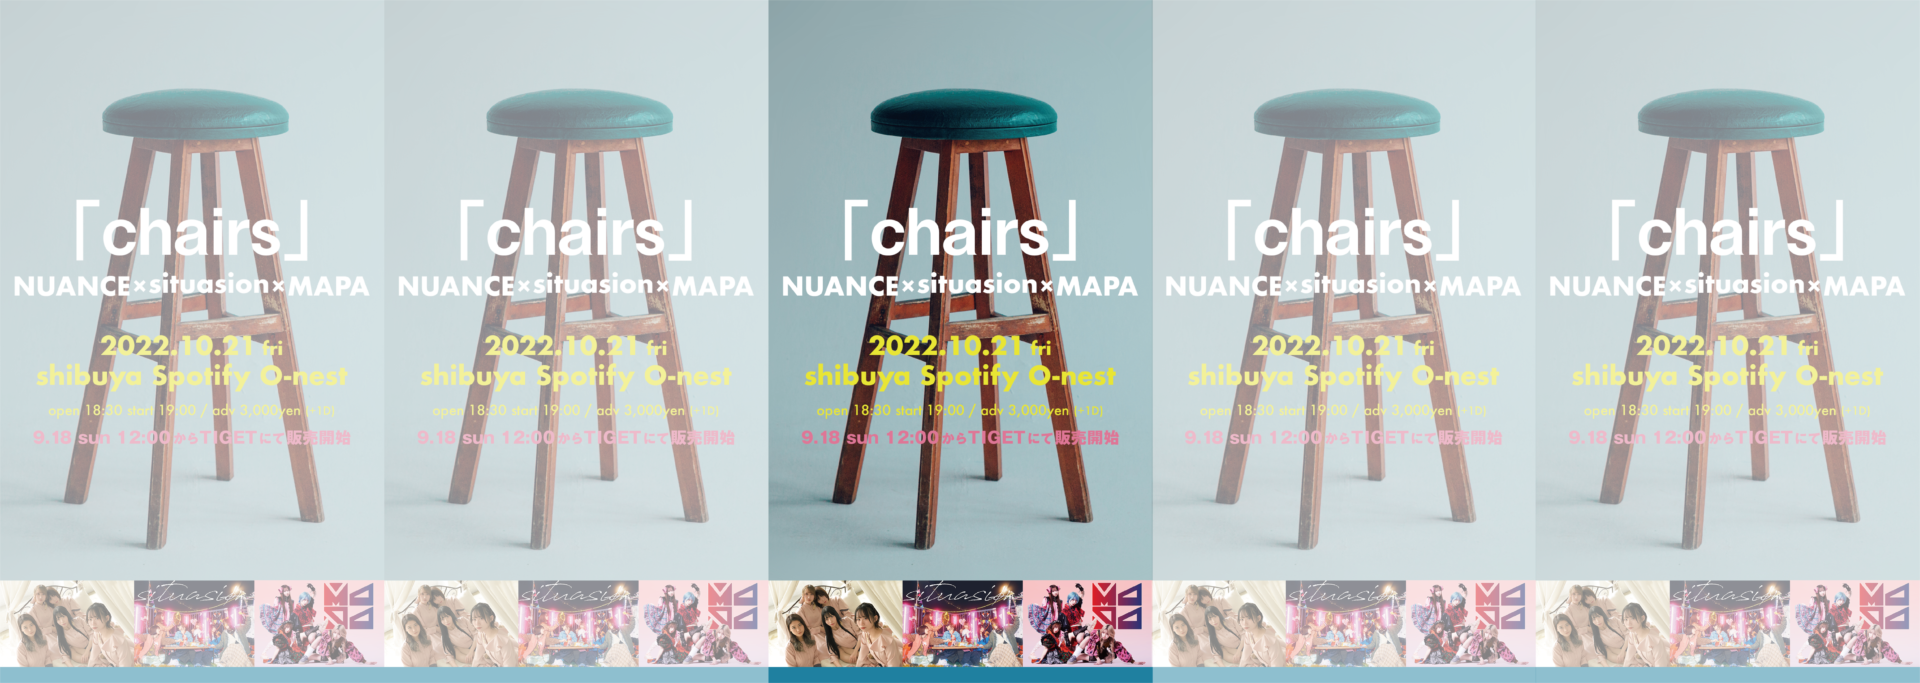 NUANCE×situasion×MAPA  「chairs」